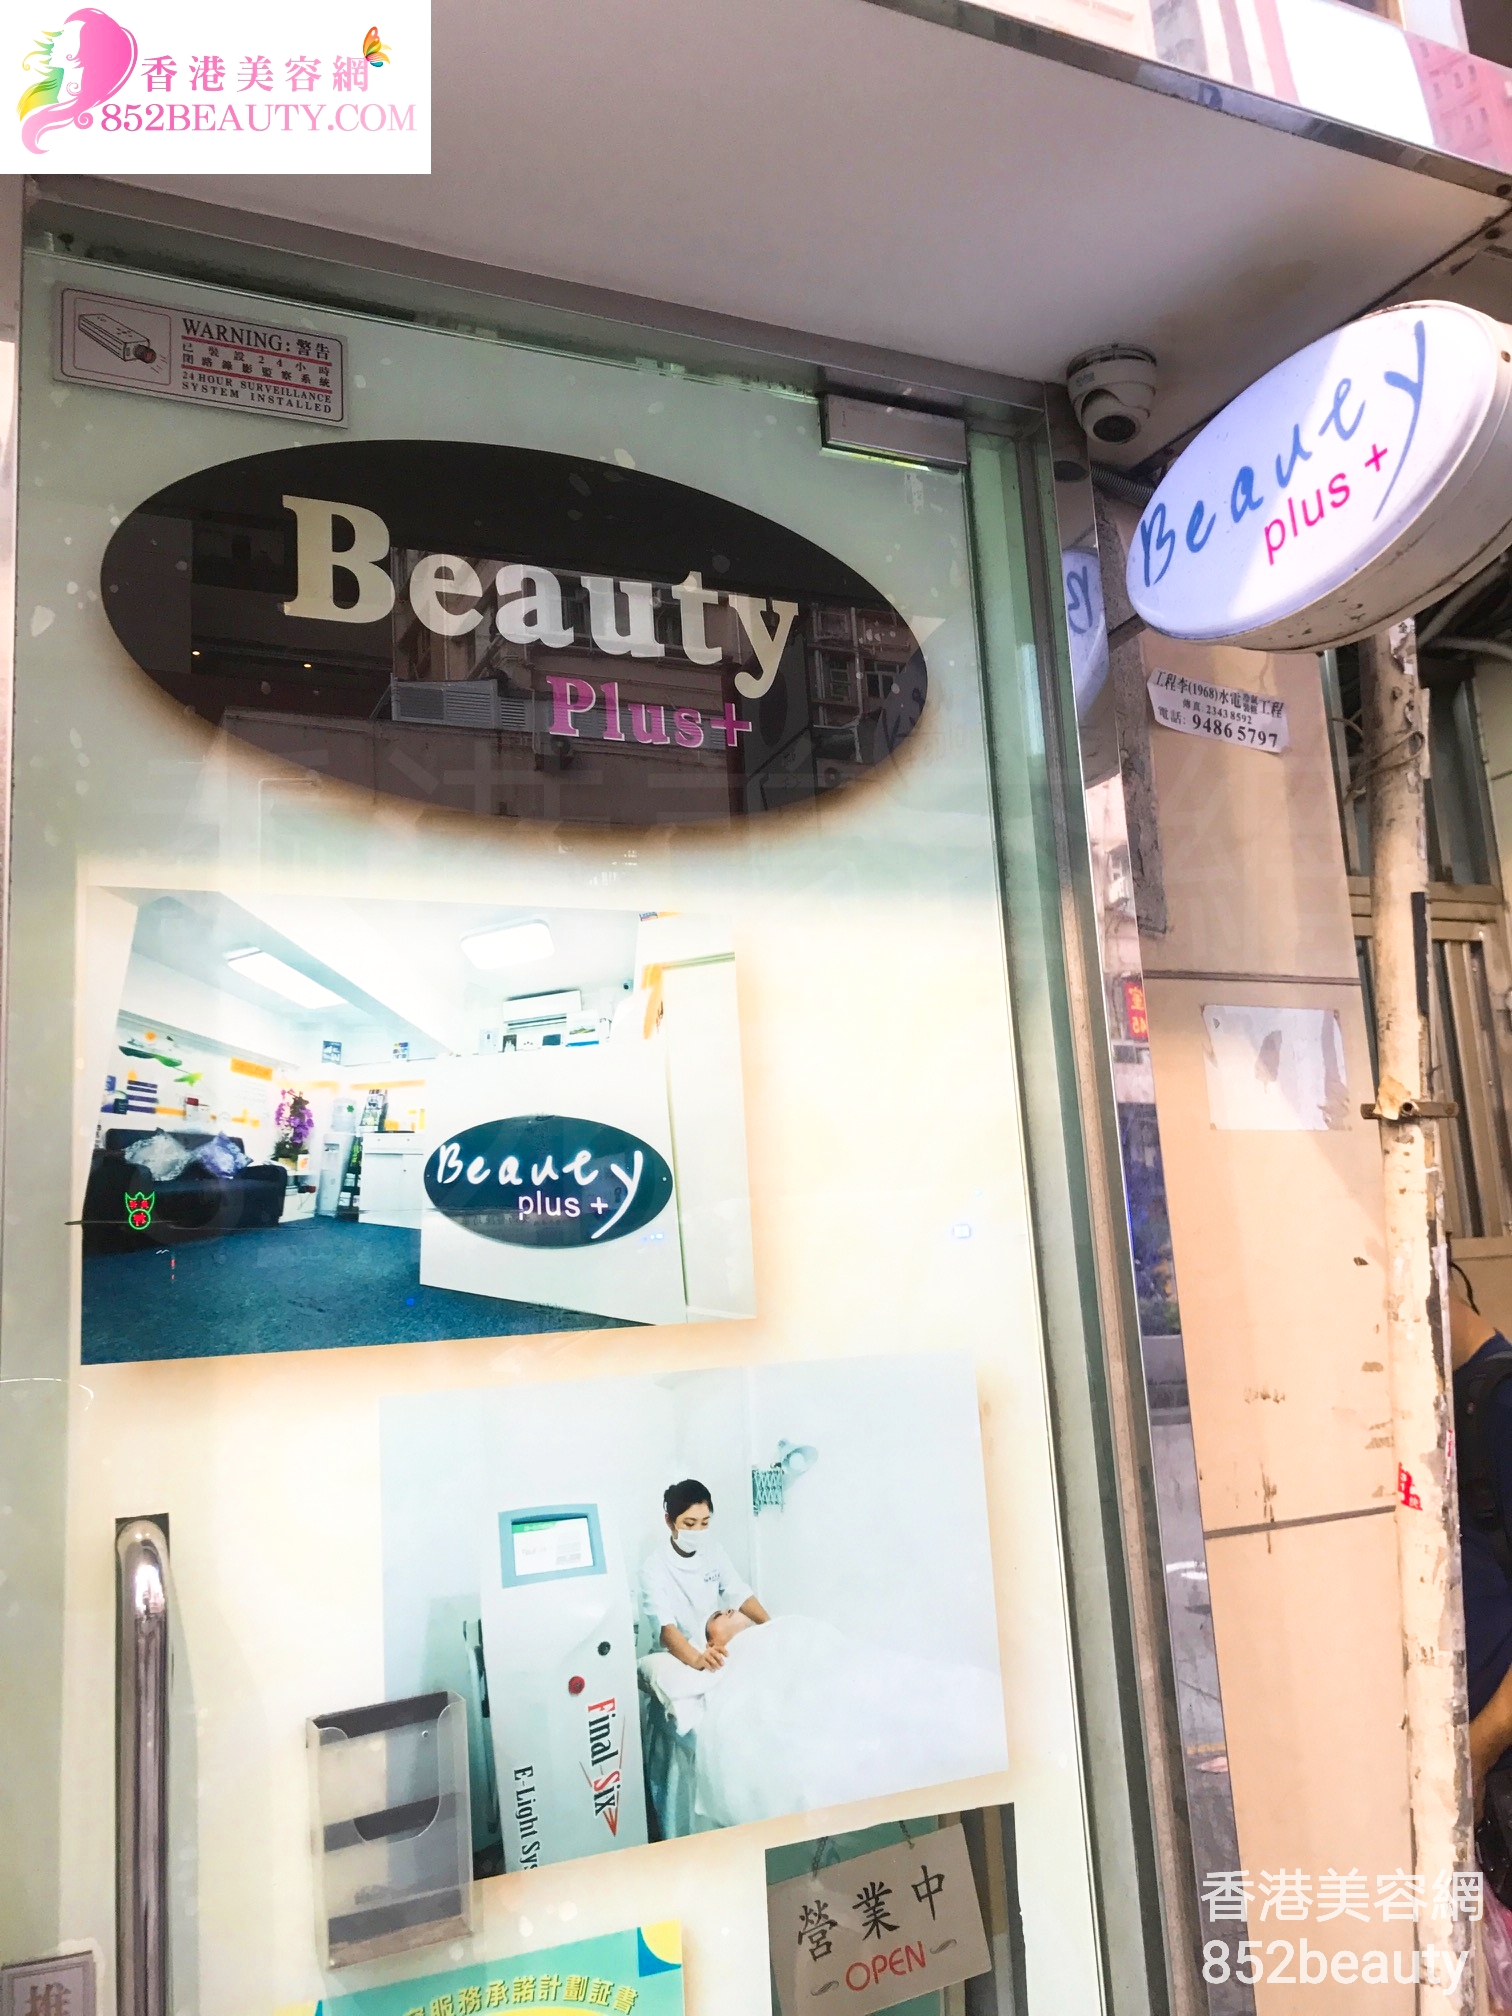 美容院 Beauty Salon: Beauty plus+